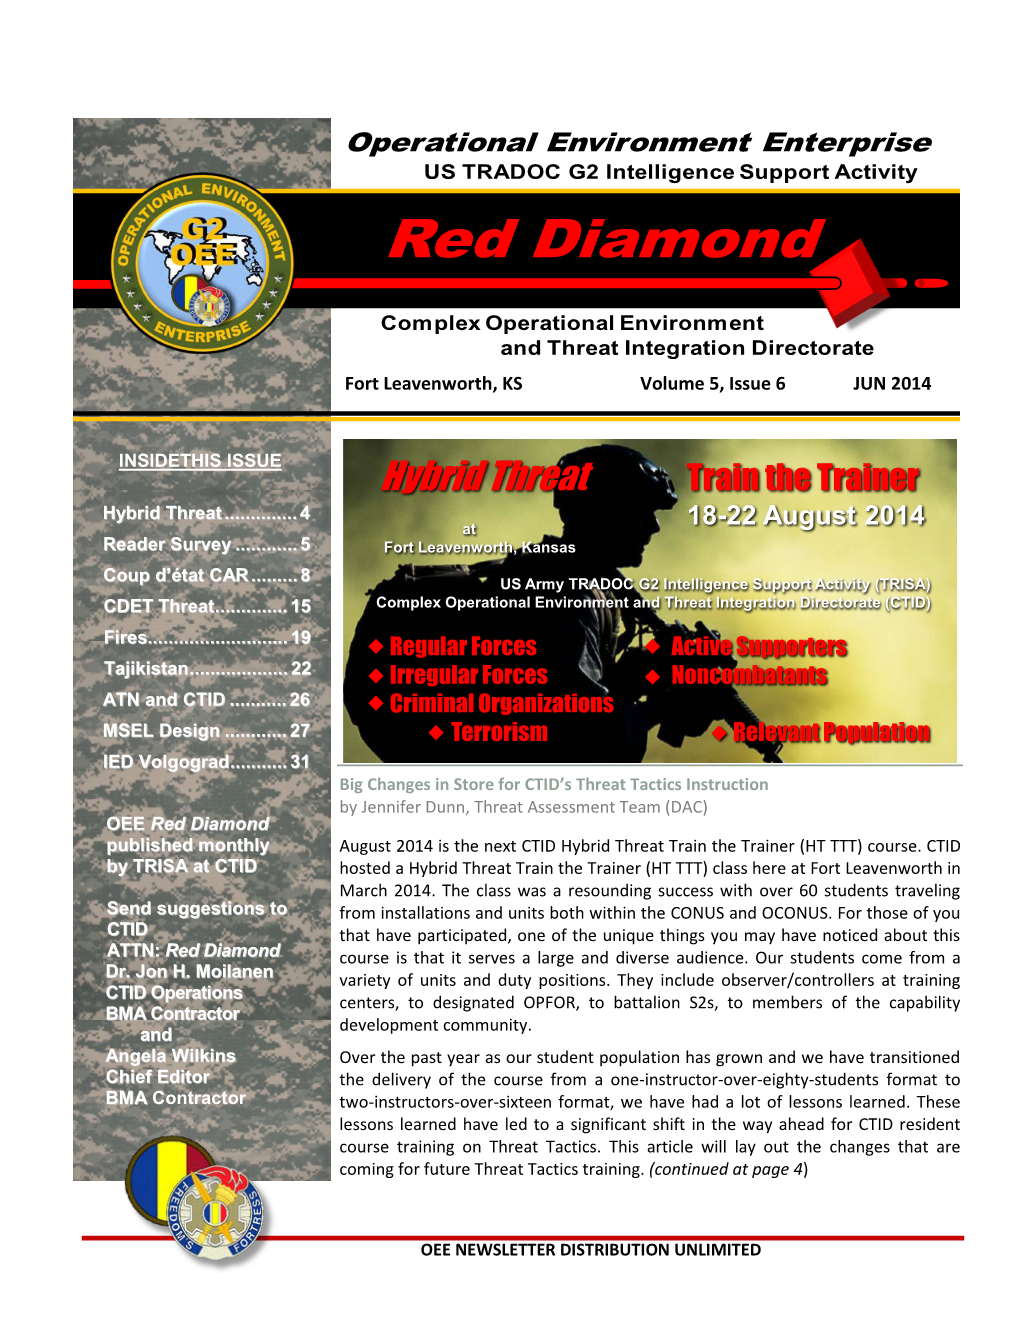 Red Diamond Newsletter (BMA Ctr)